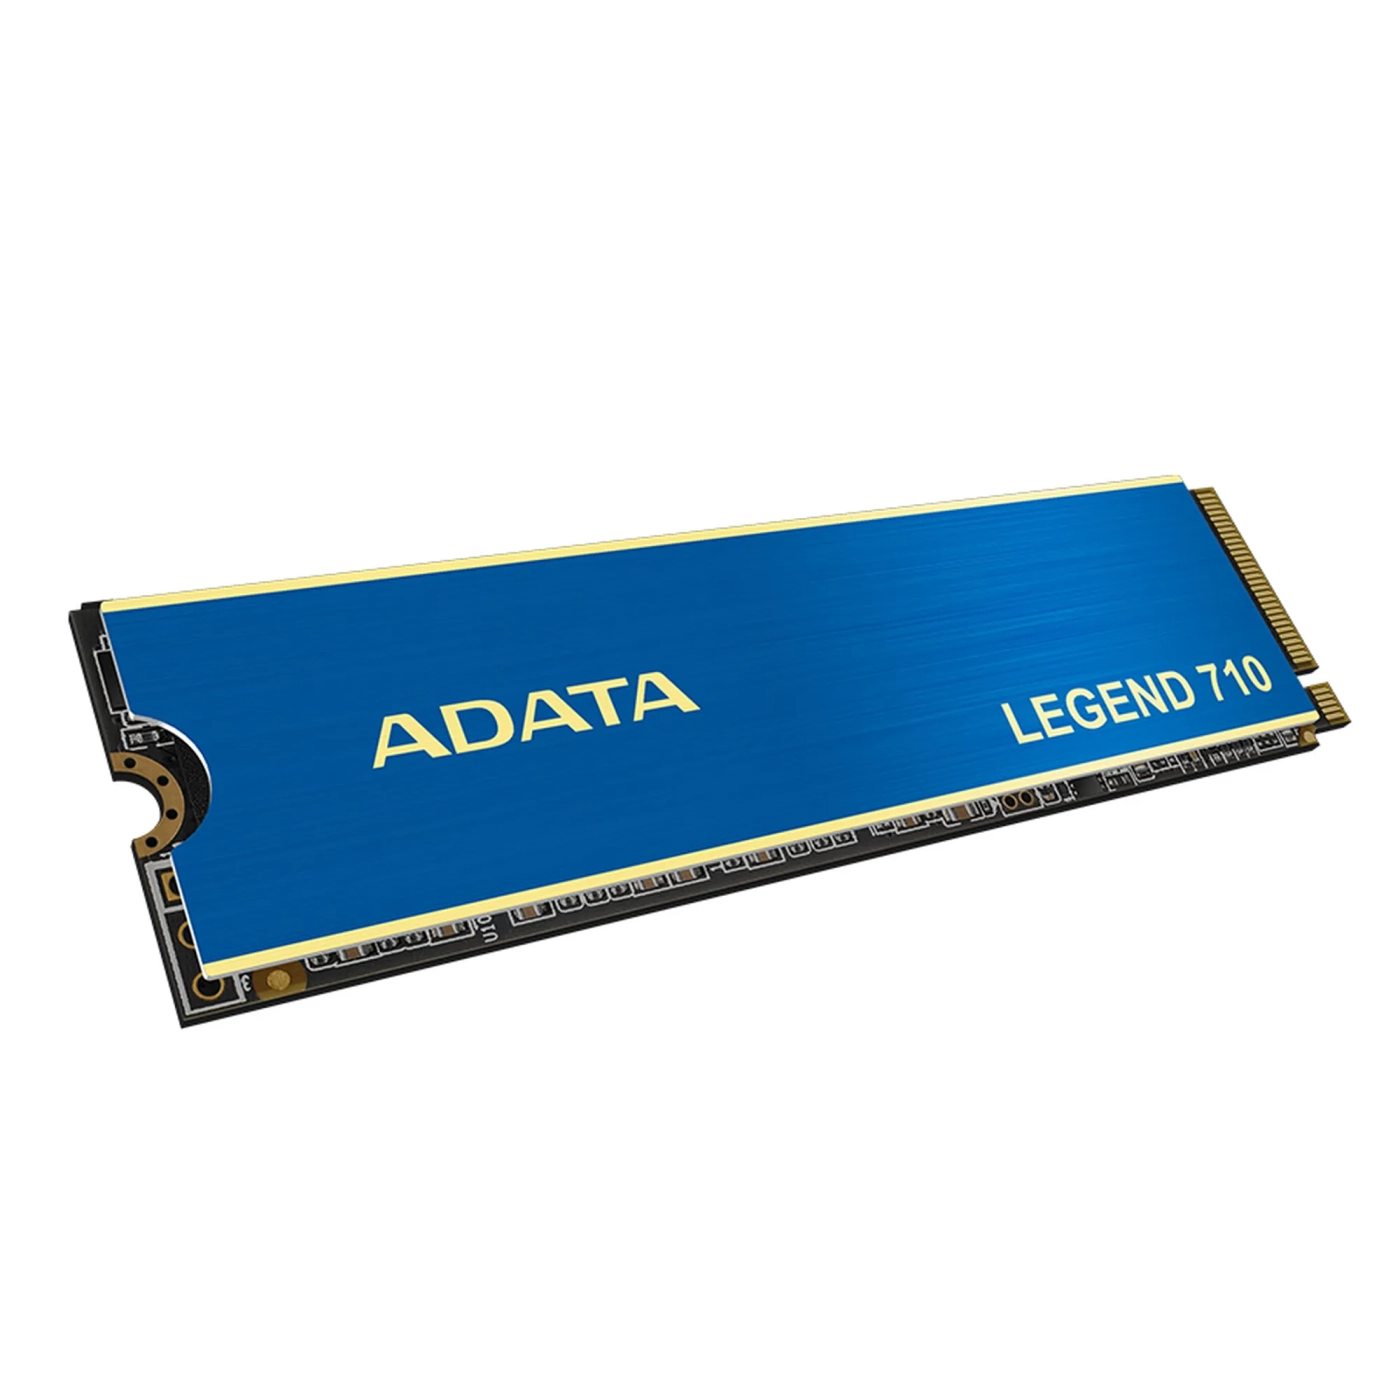 Купить SSD ADATA Legend 710 1TB M.2 NVMe - фото 4